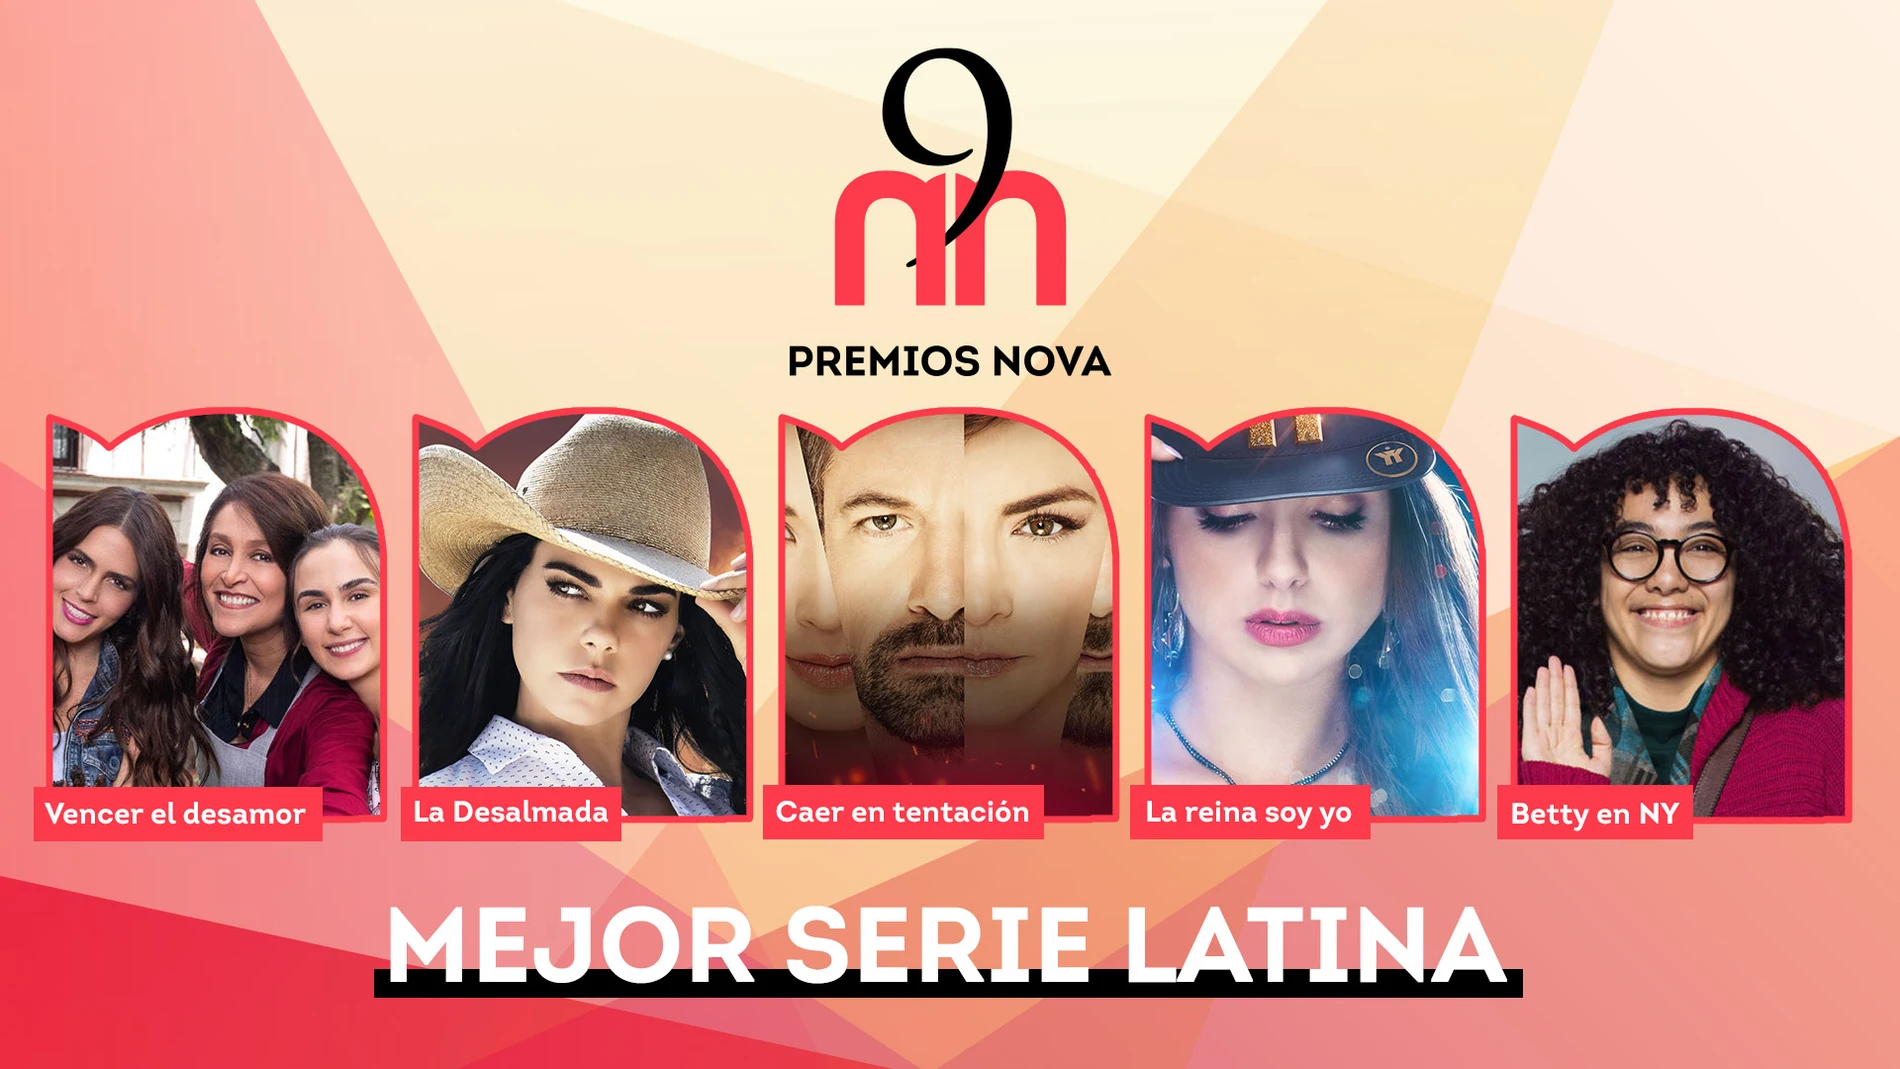 'Las 9 de Nova' Mejor serie latina